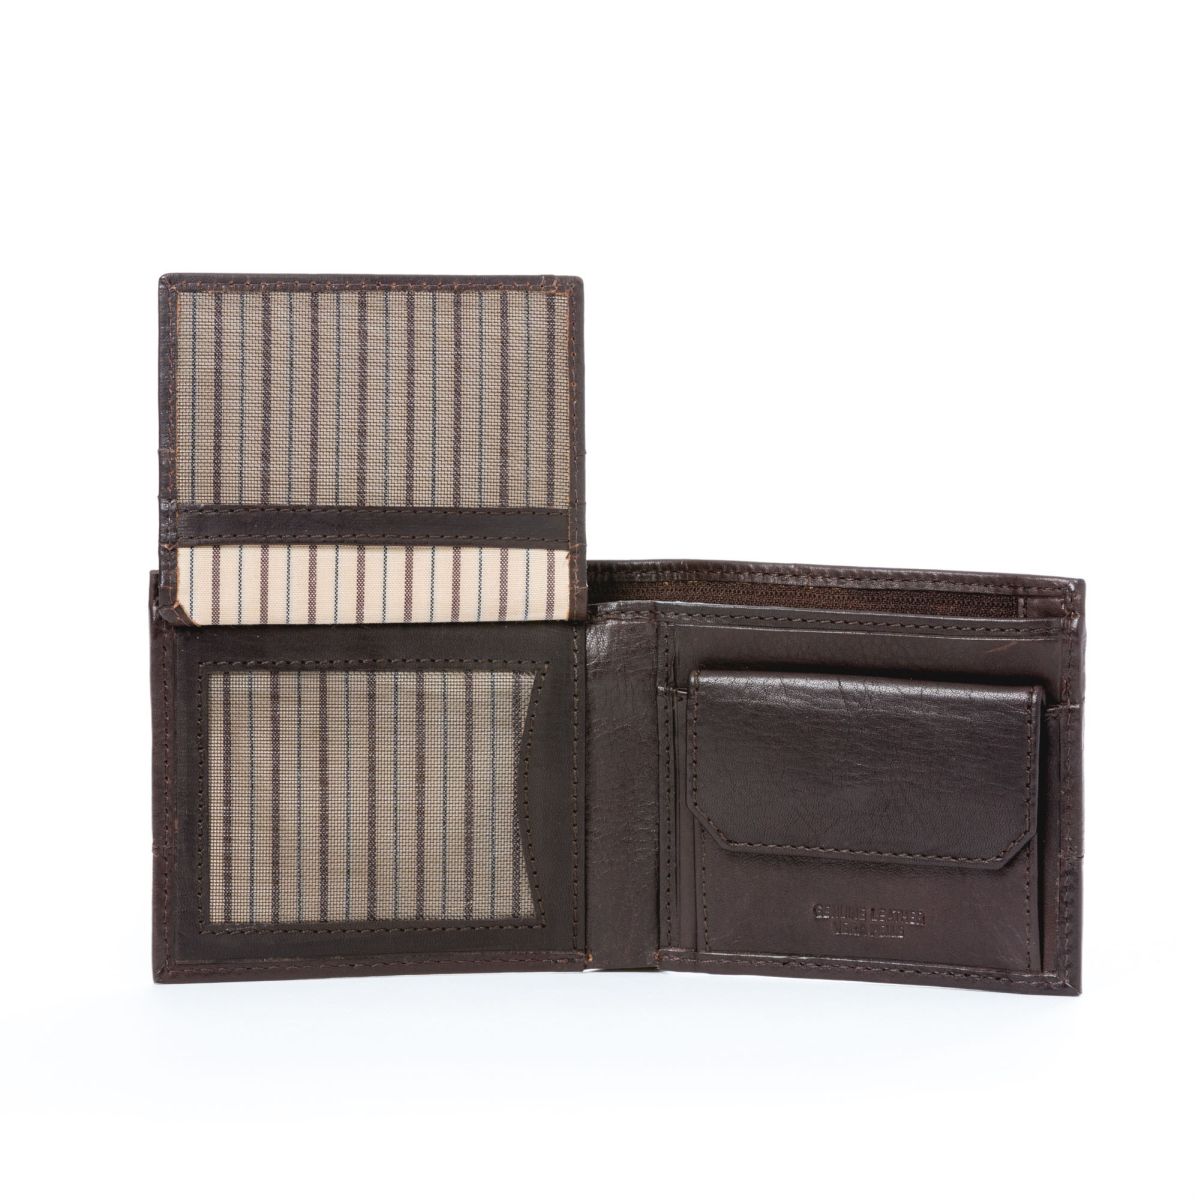 DuDu Unique Leather Wallet With Coin Purse - Dark Brown